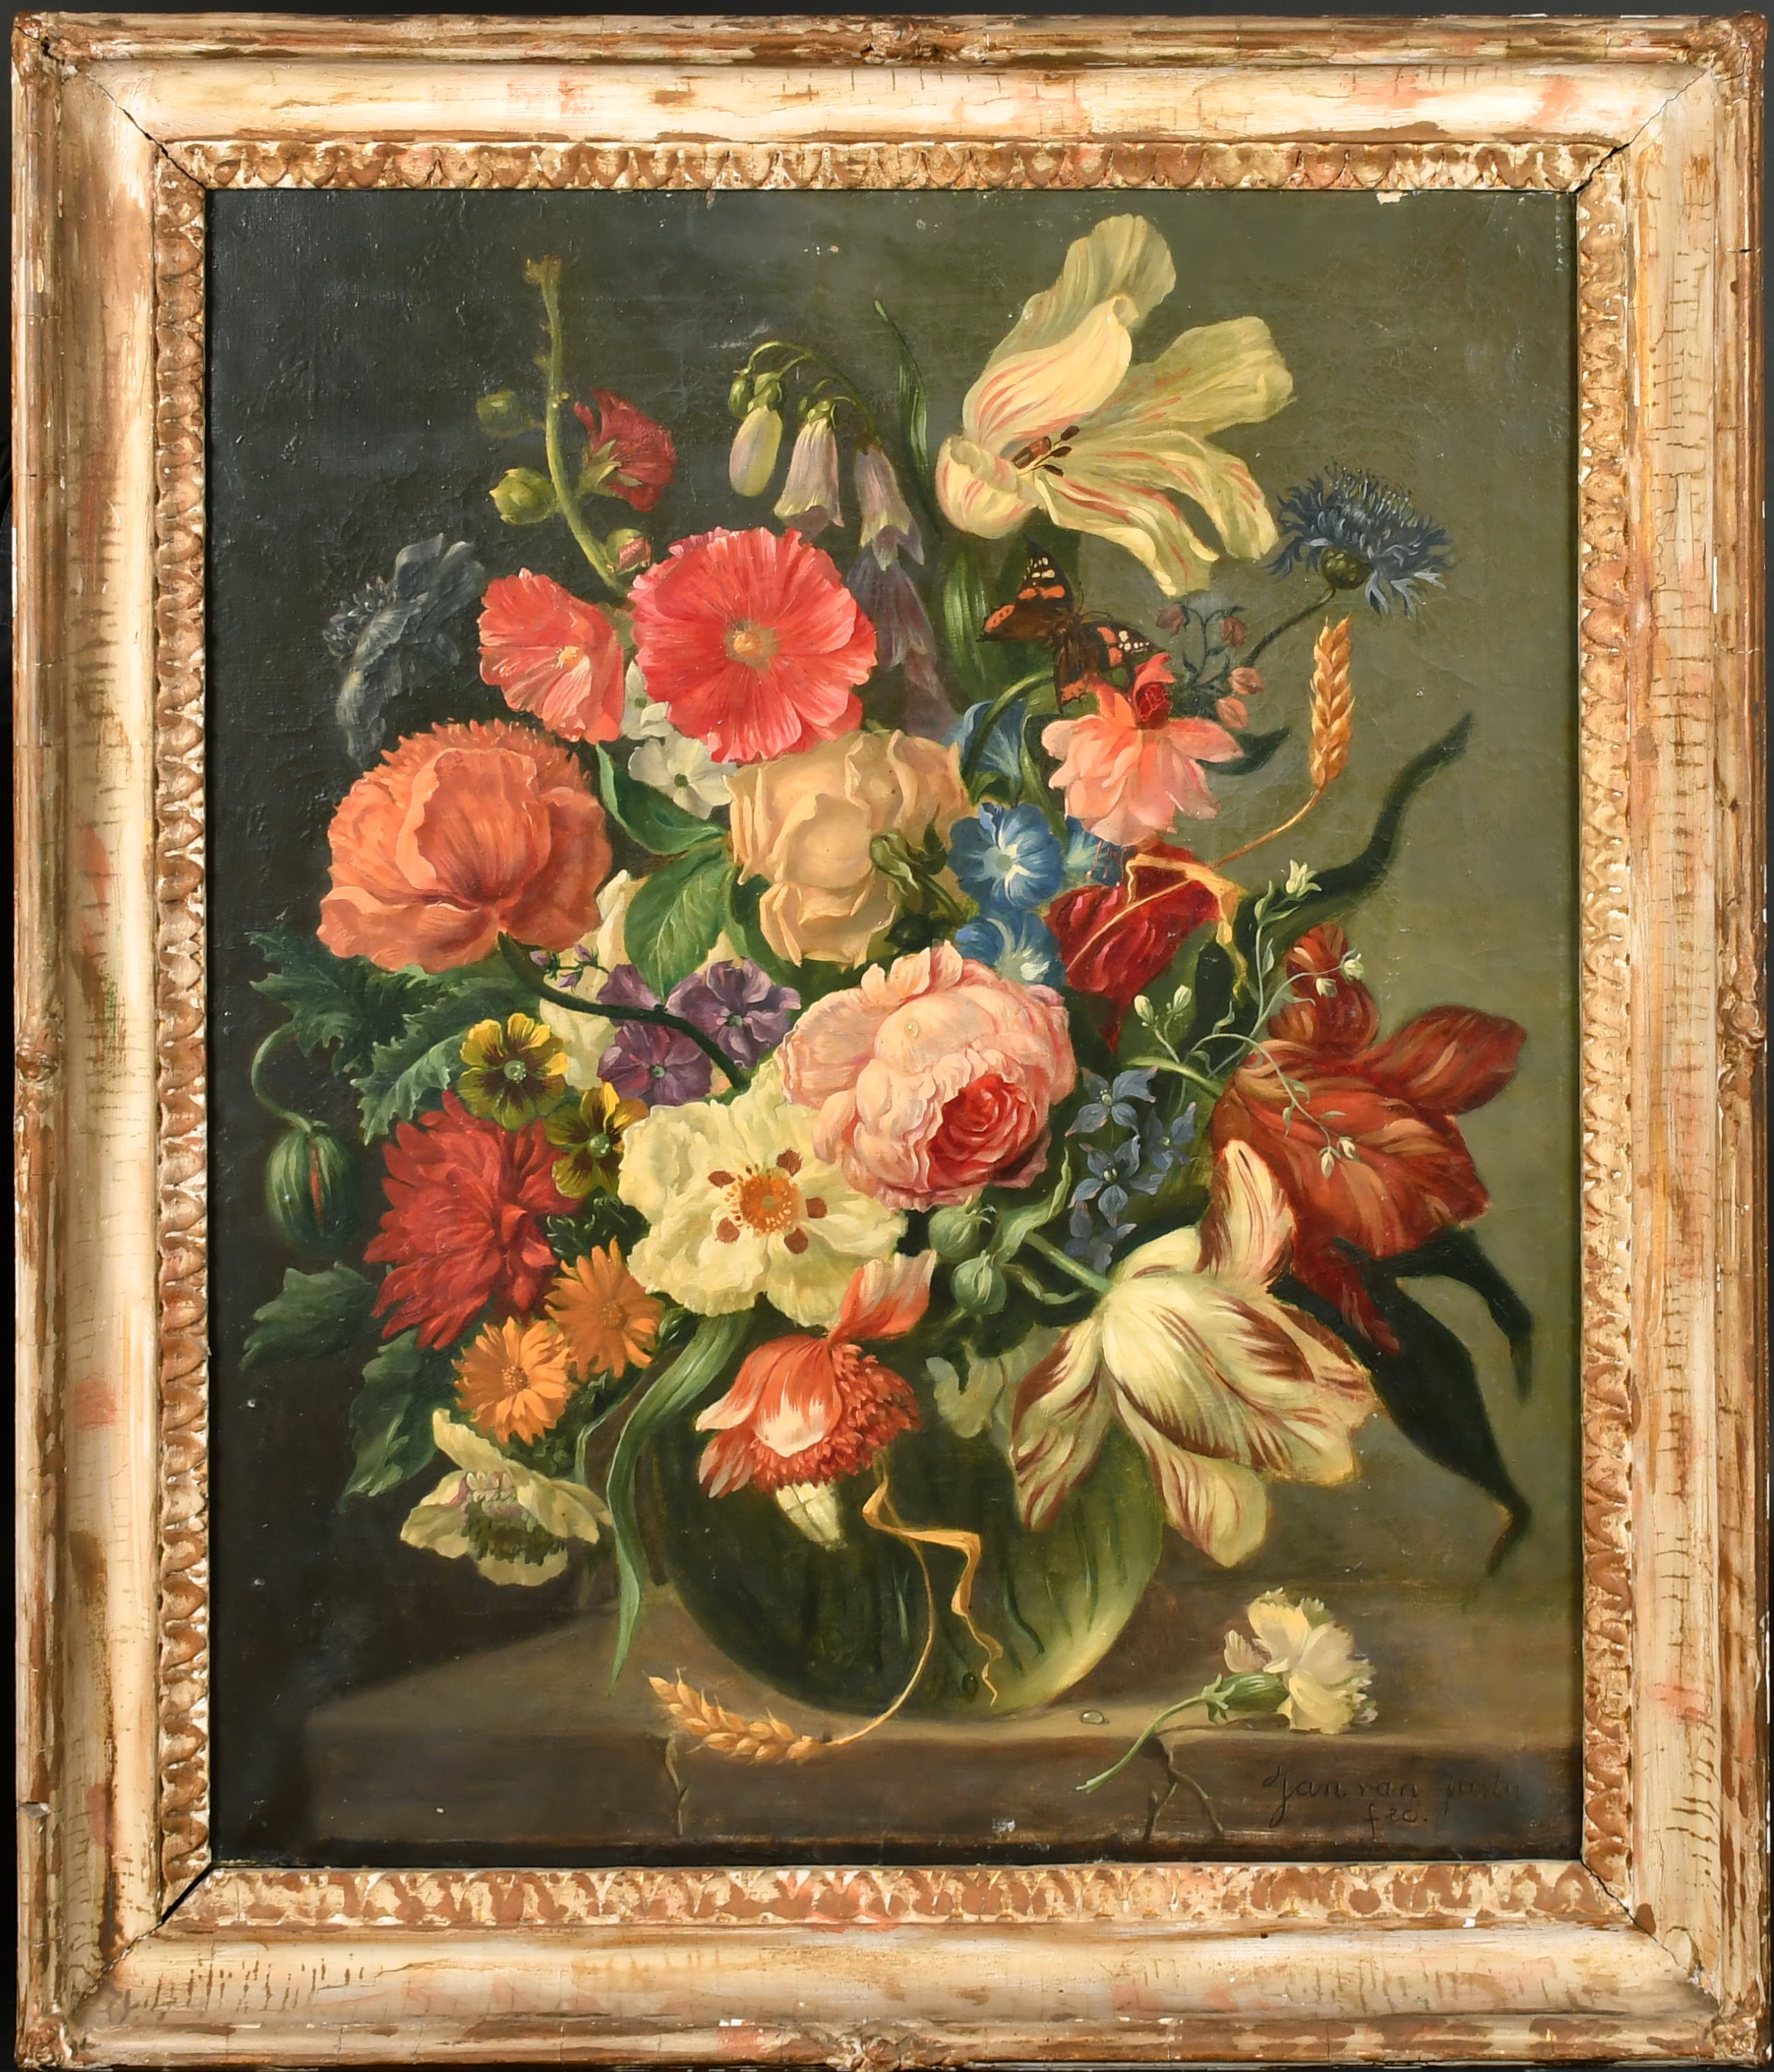 Jan van Justus (20th Century) European. Still Life of Flowers in a Glass Vase, Oil on canvas, - Image 2 of 4